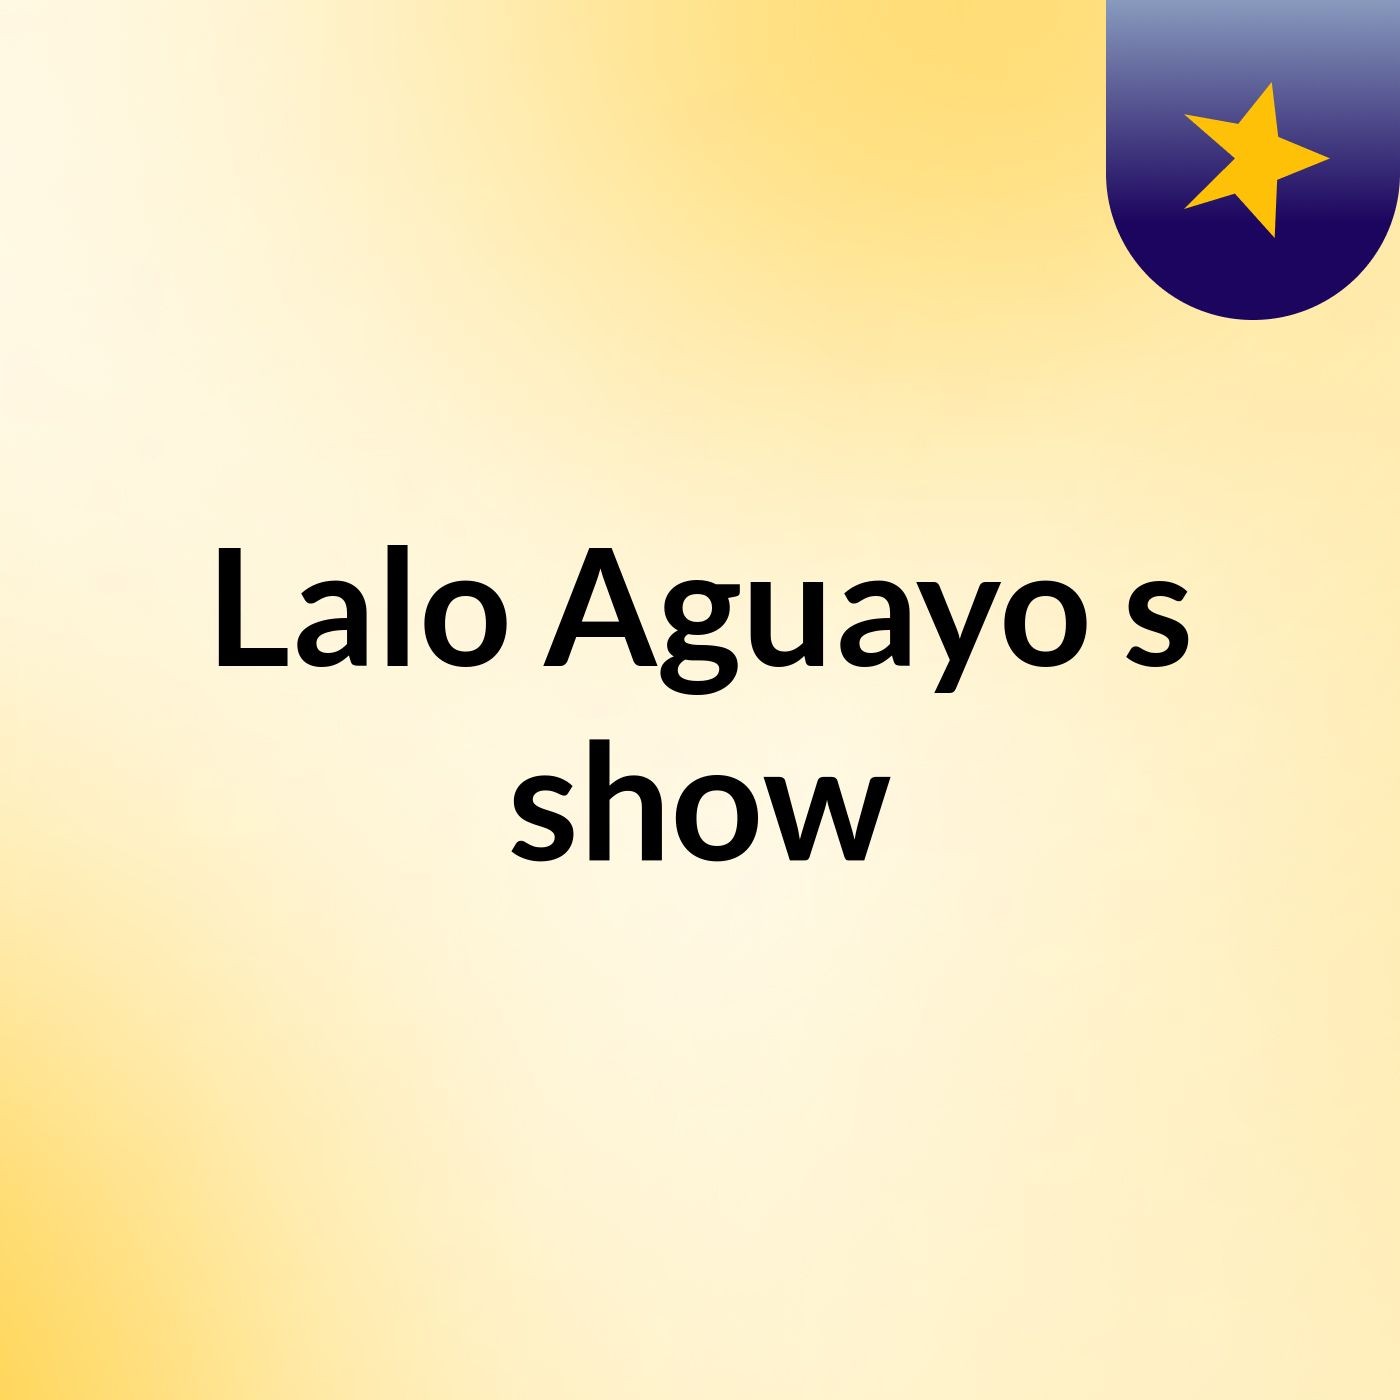 Lalo Aguayo's show